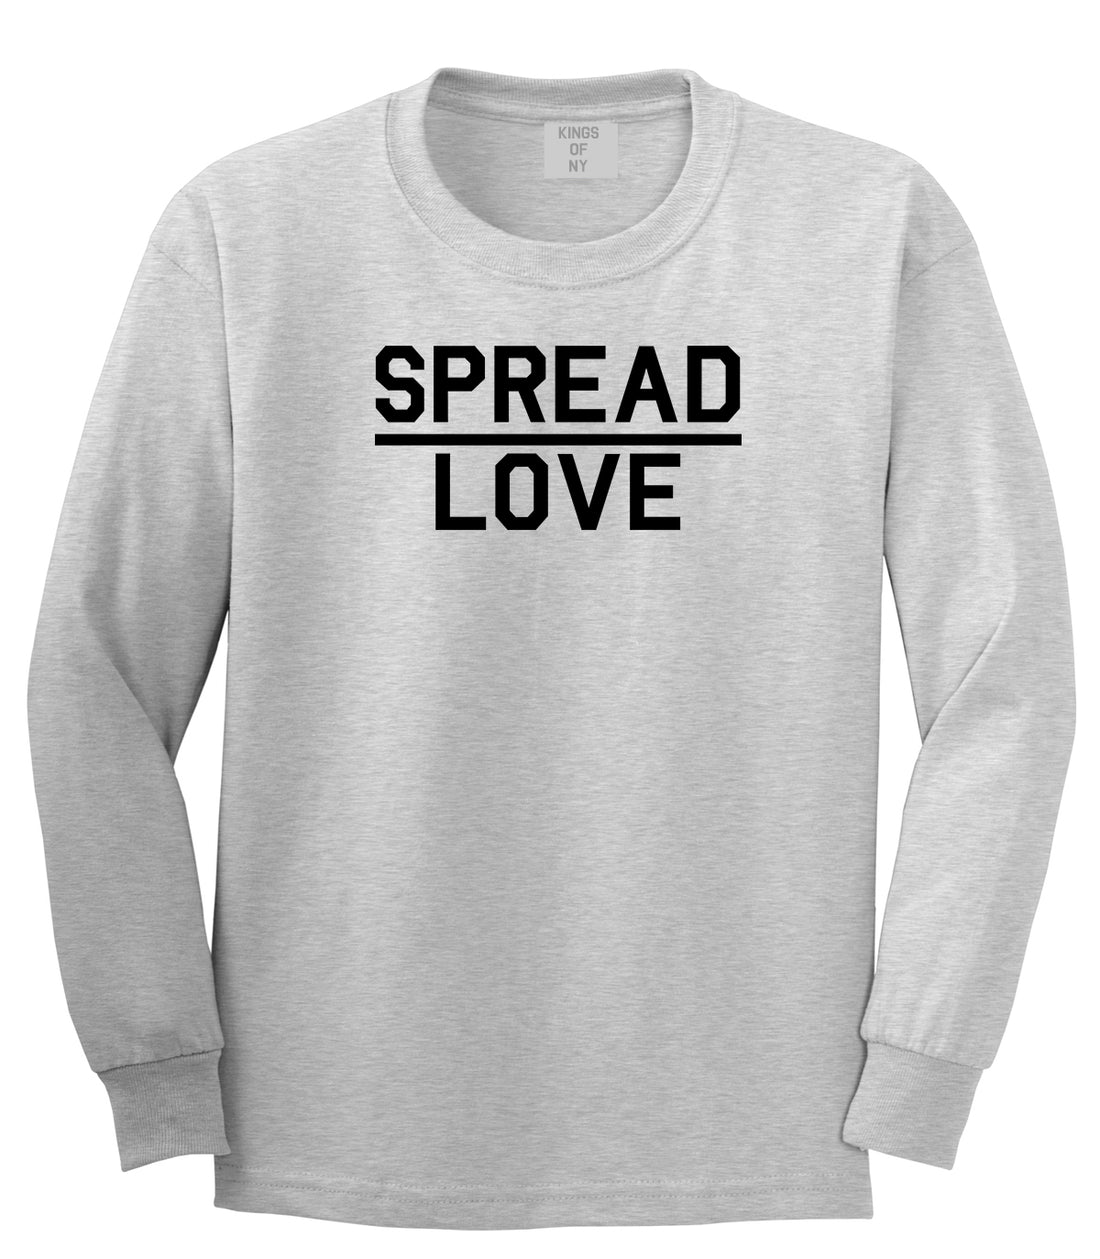 Spread Love Brooklyn Long Sleeve T-Shirt in Grey